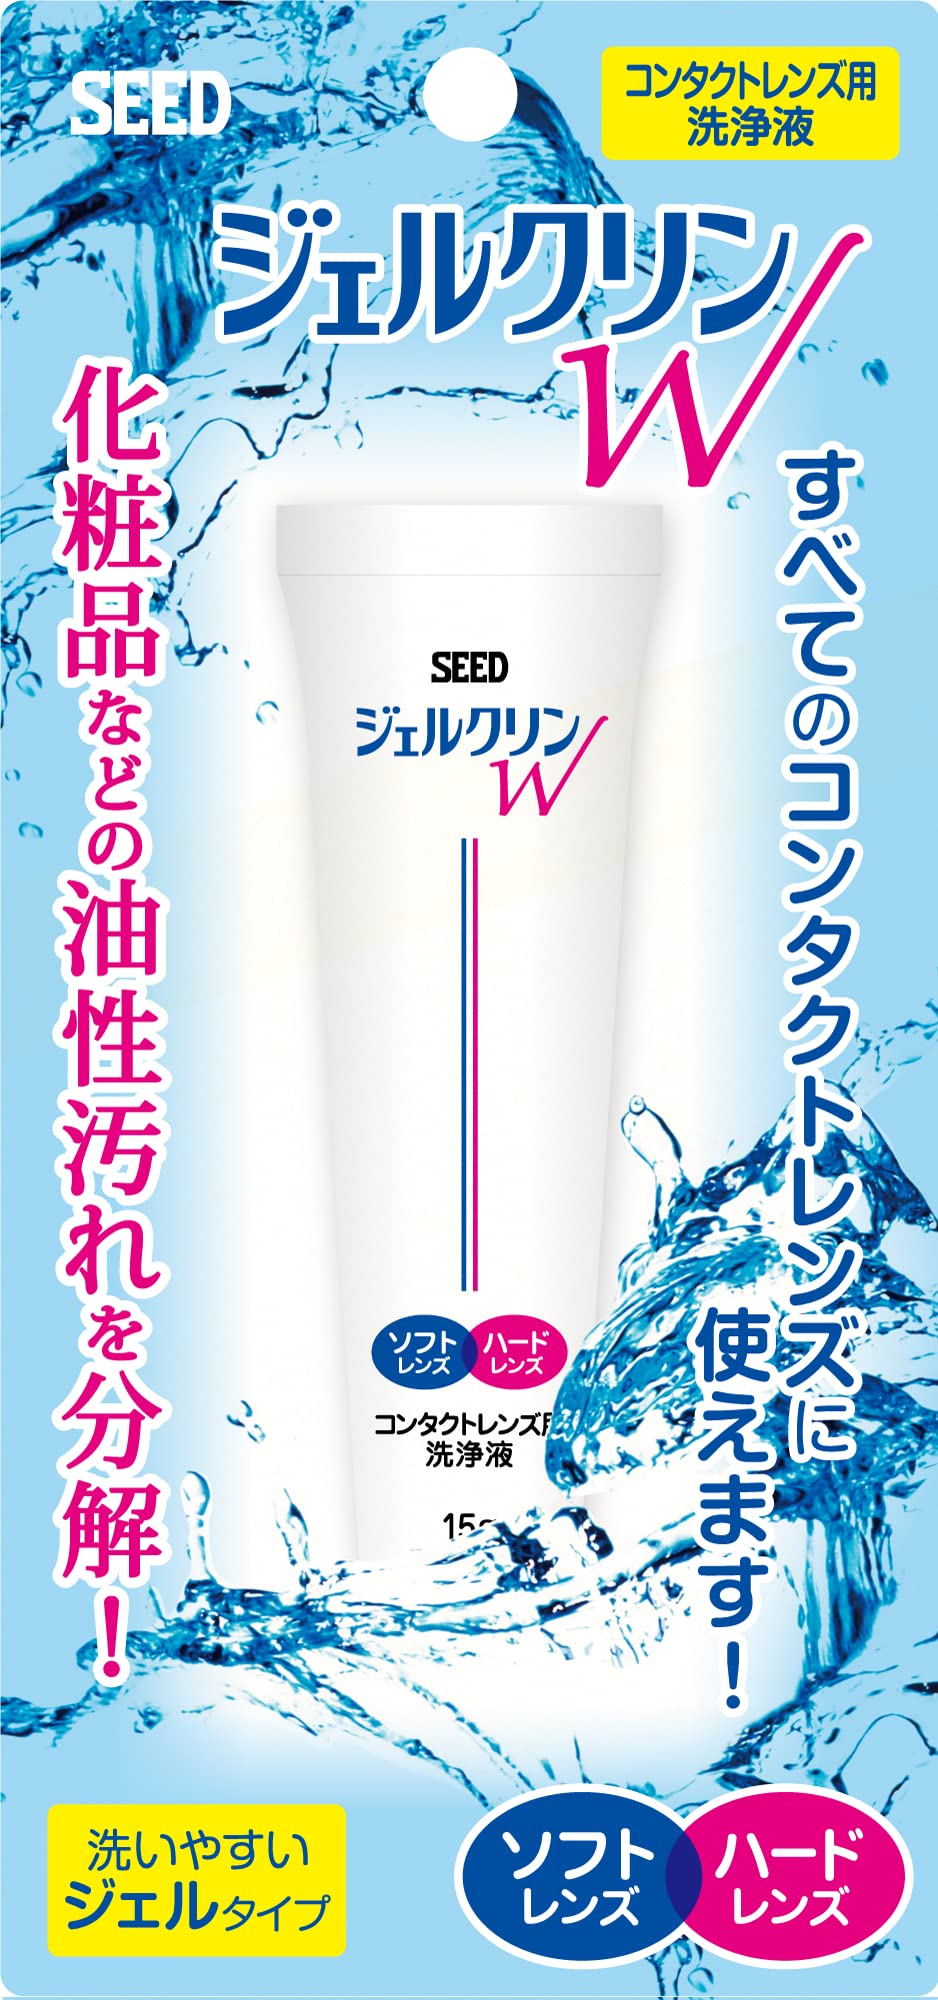 Jerklin Seed Gelclean Washing 15G Soft & Hard Japan